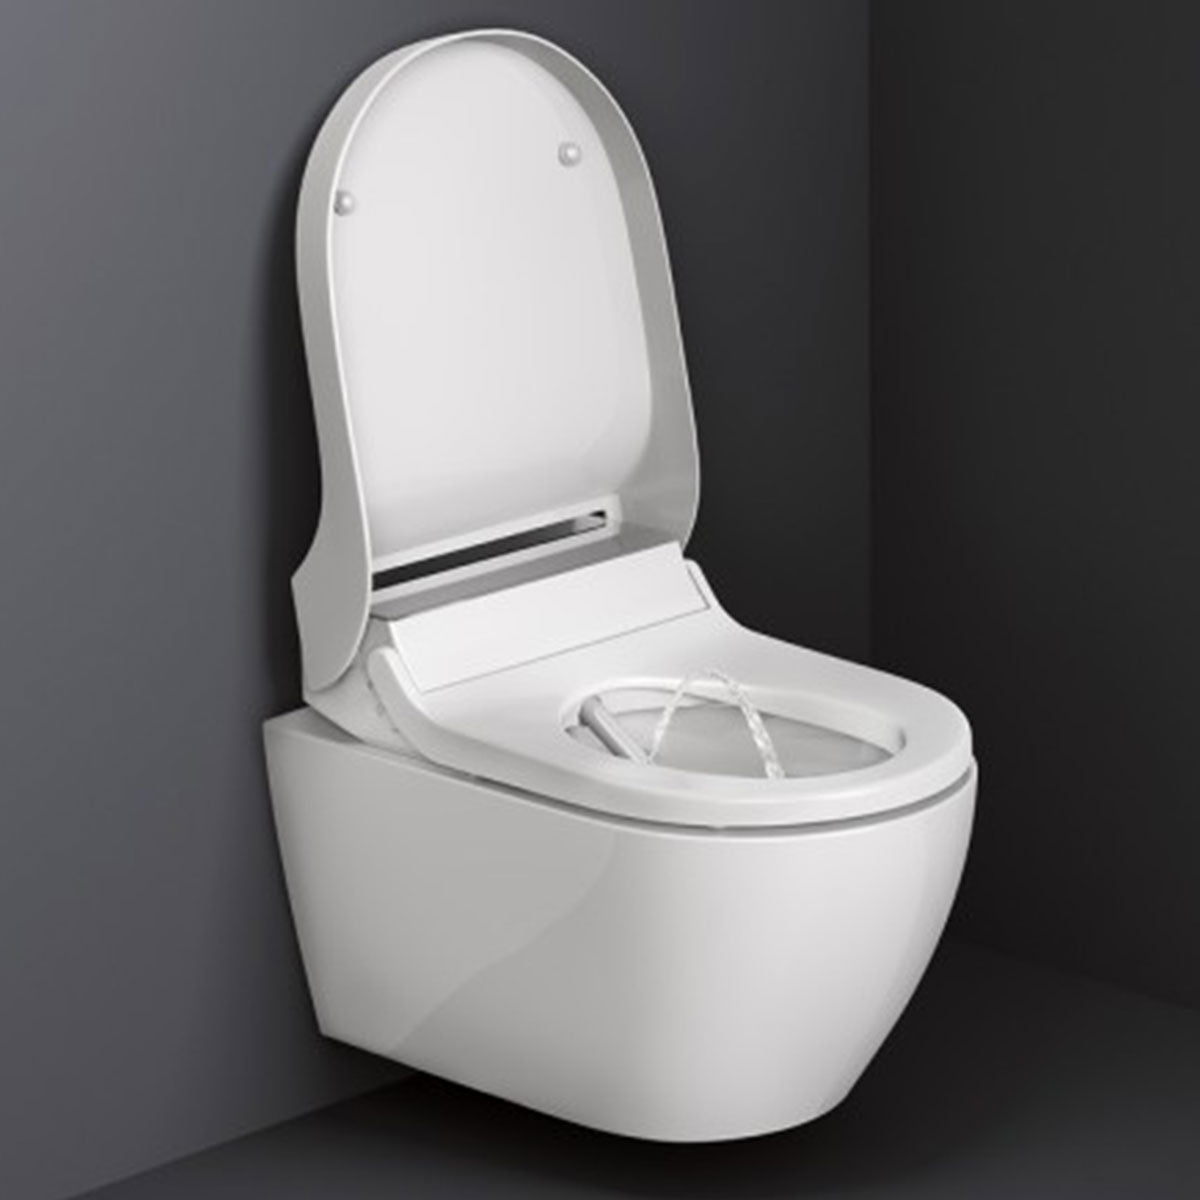 Geberit AquaClean Tuma Comfort Rimless Wall Hung WC Pan With Soft Close Toilet Seat